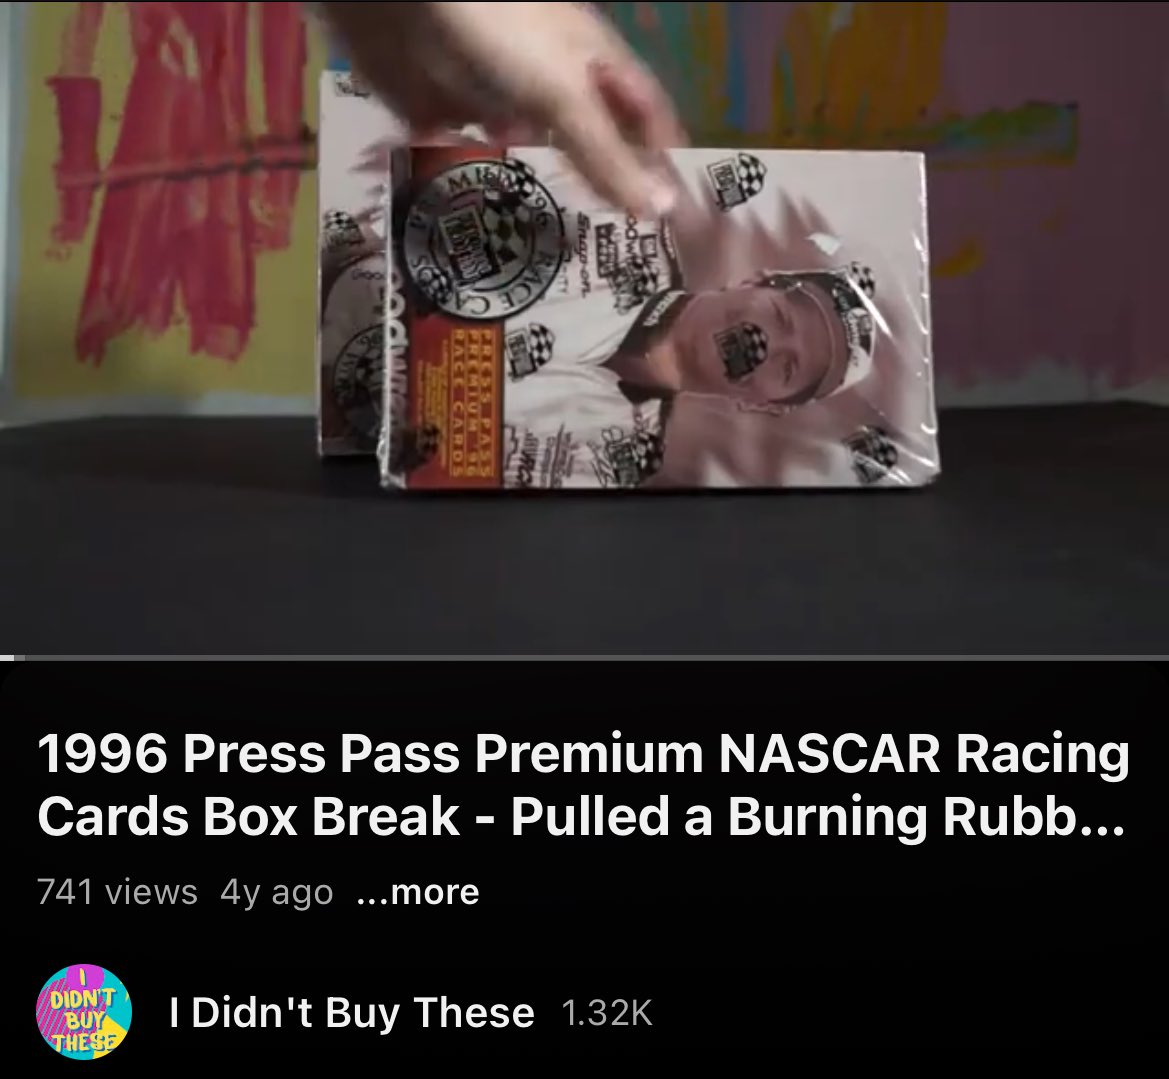 My 1st NASCAR card video: 1996 Press Pass Premium NASCAR Racing Cards Box Break - Pulled a Burning youtu.be/fs6xmOQQu6g?si… share links to your first NASCAR card YouTube videos @beansbcardblog @CharmCityGraphs @CaseyMcMullenSr @hallieimrie @NascardRadio @kingnascar #nascarcards